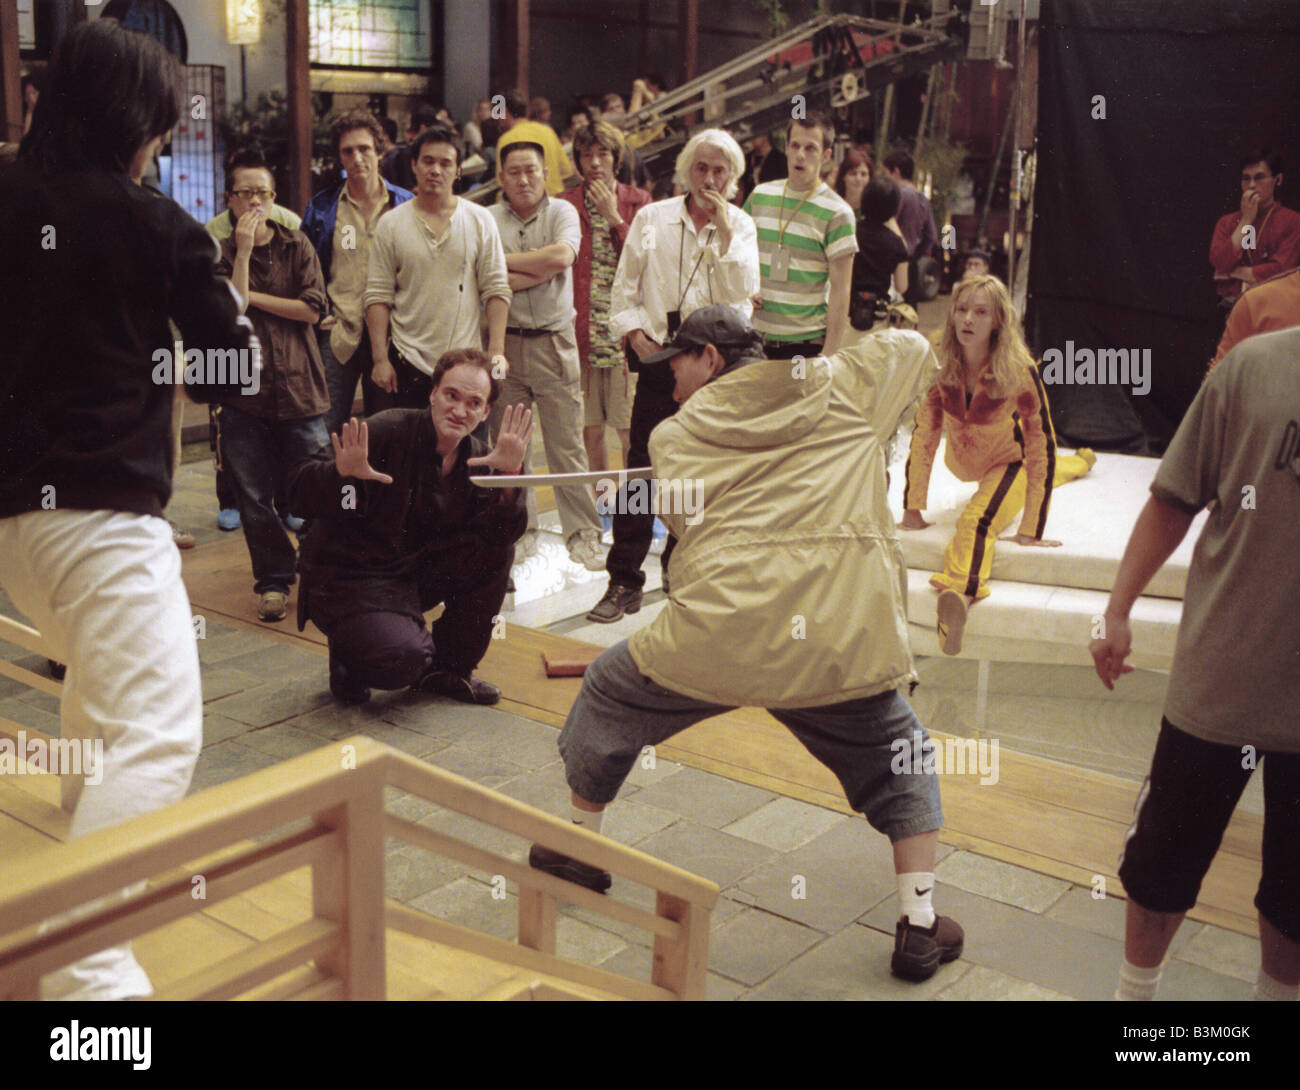 KILL BILL VOL 1   2003 Buena Vista film with Director Quentin Tarantino checking an angle prior to shooting Stock Photo